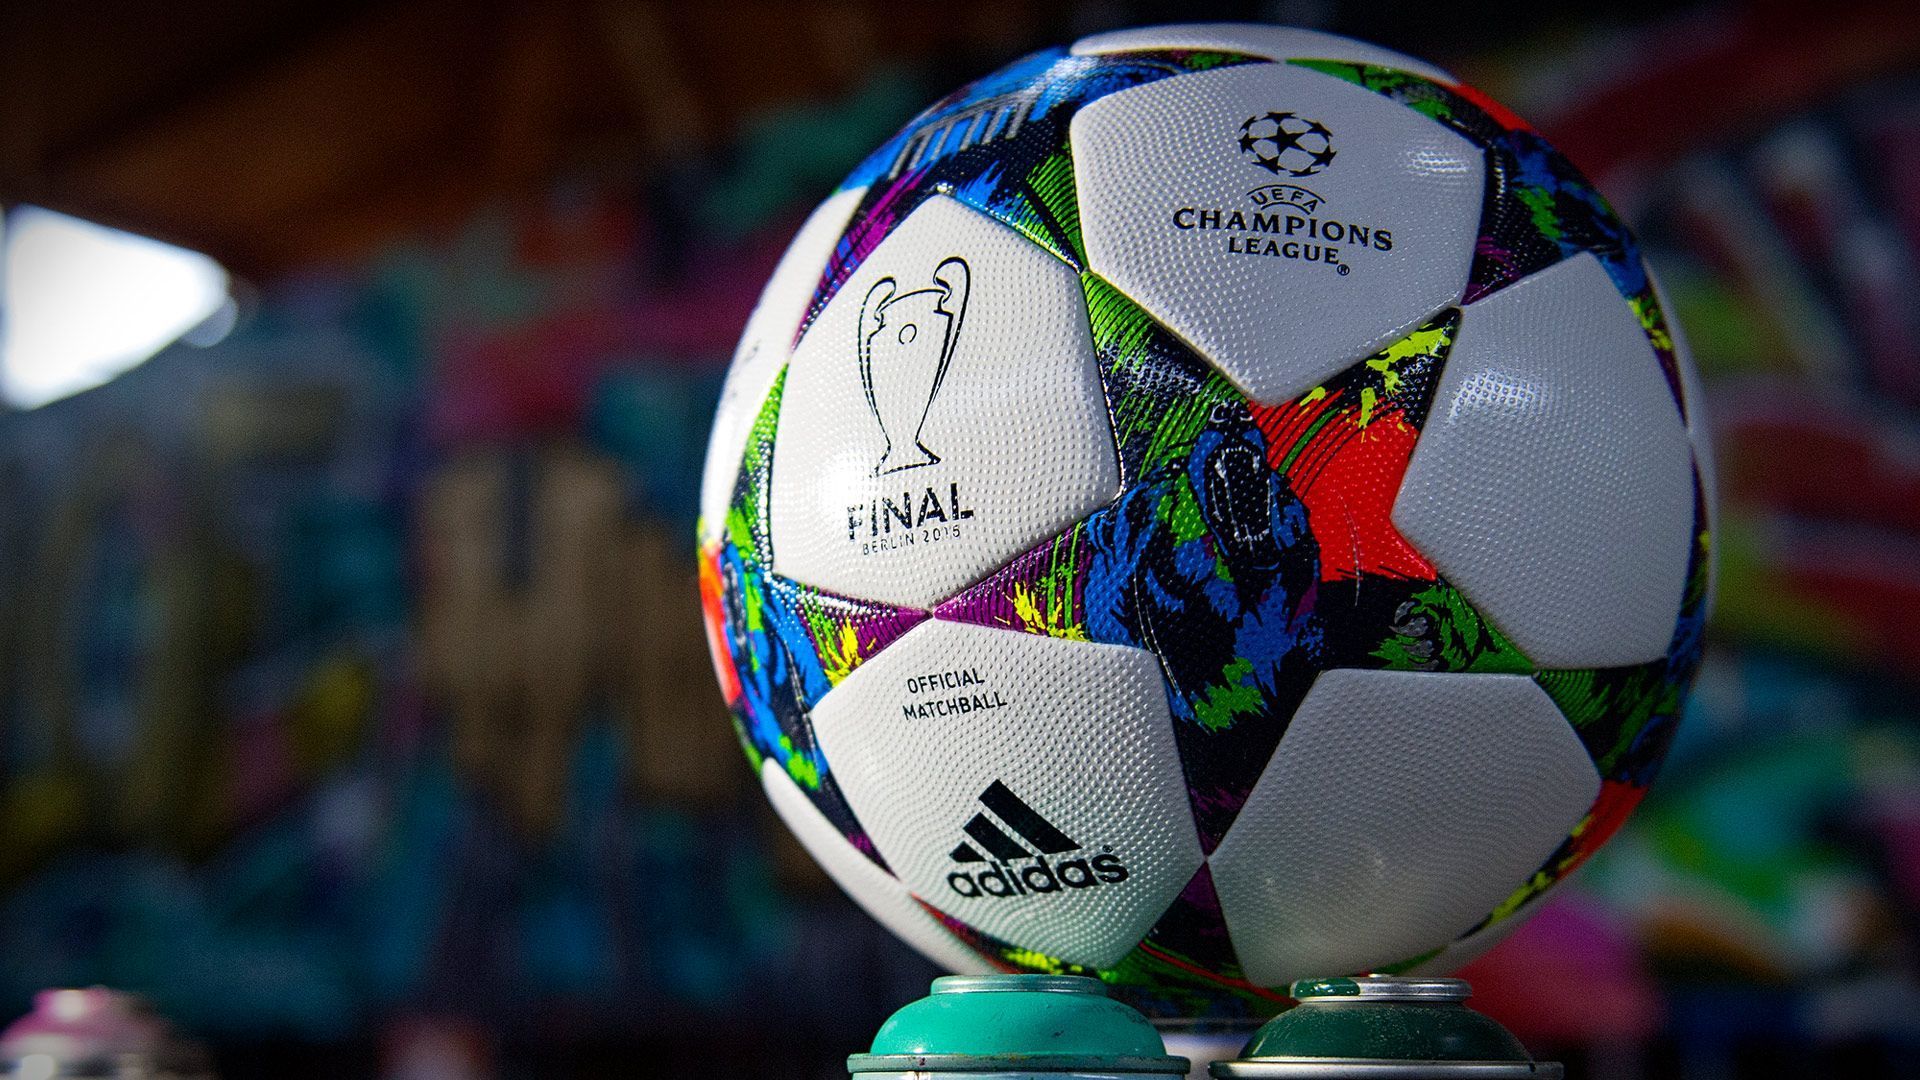 UEFA champions league 2015 ball wallpapers – Free full hd ...